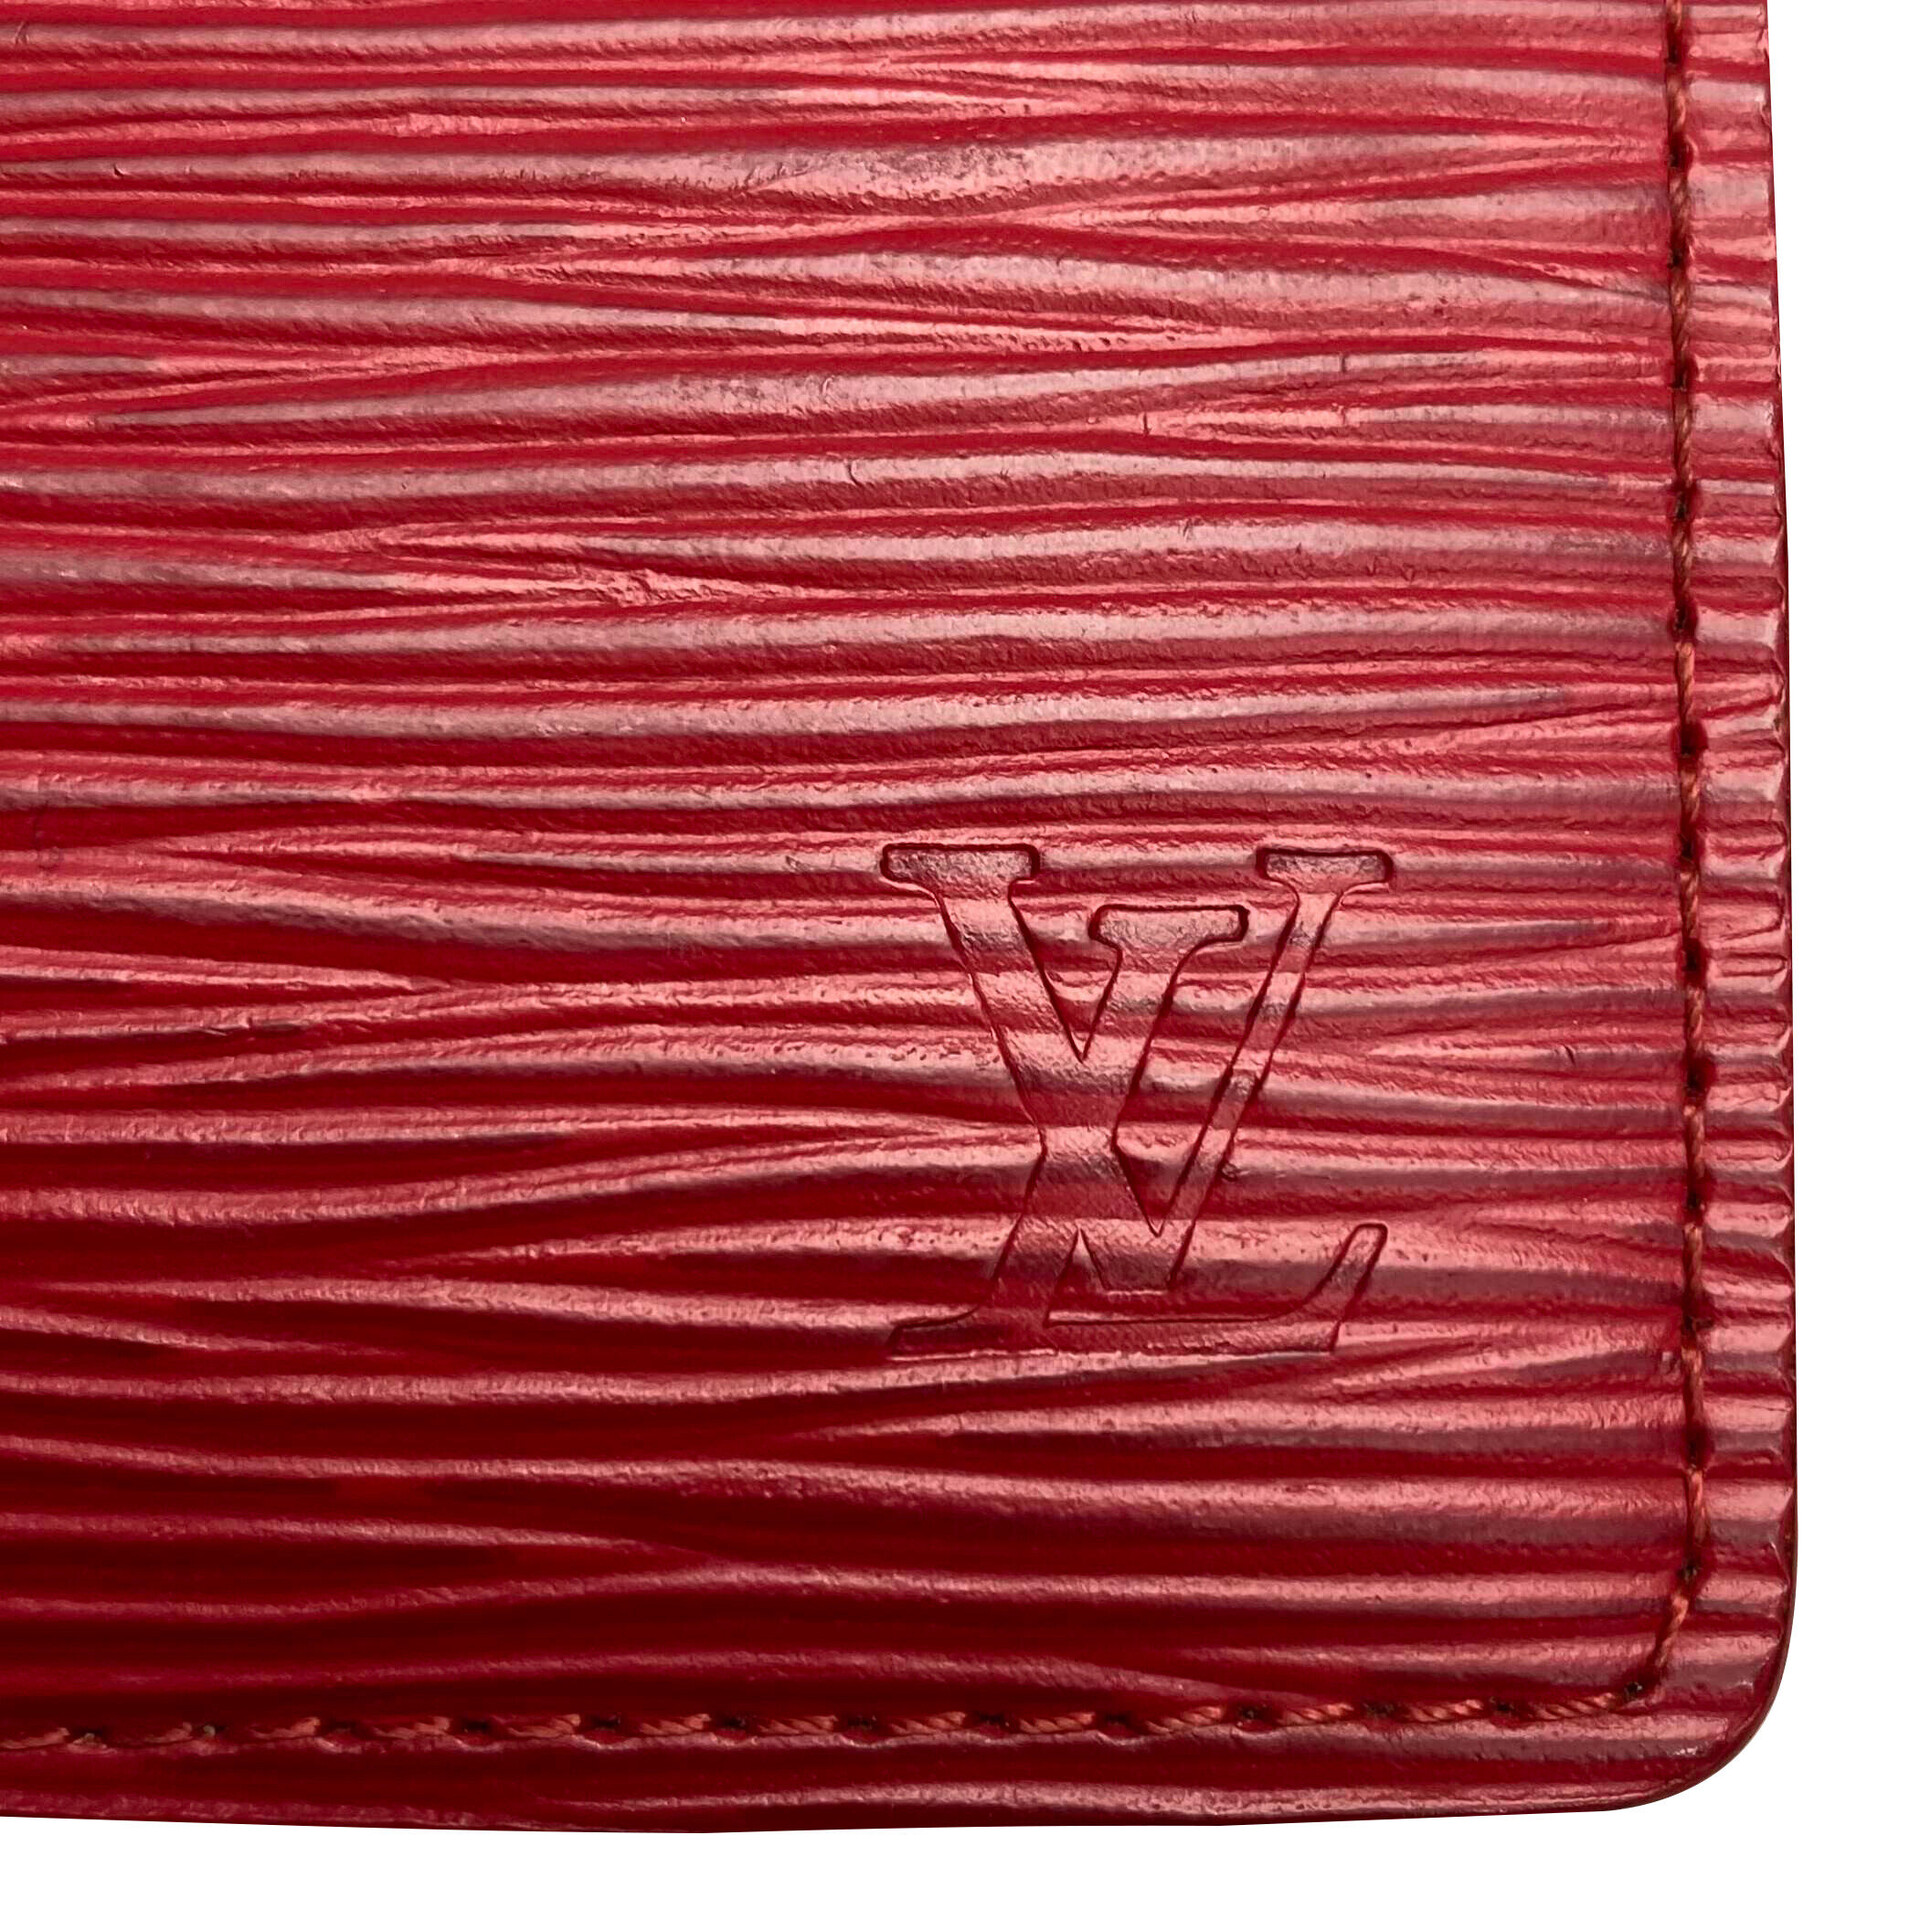 Capa de Agenda Louis Vuitton Vermelha